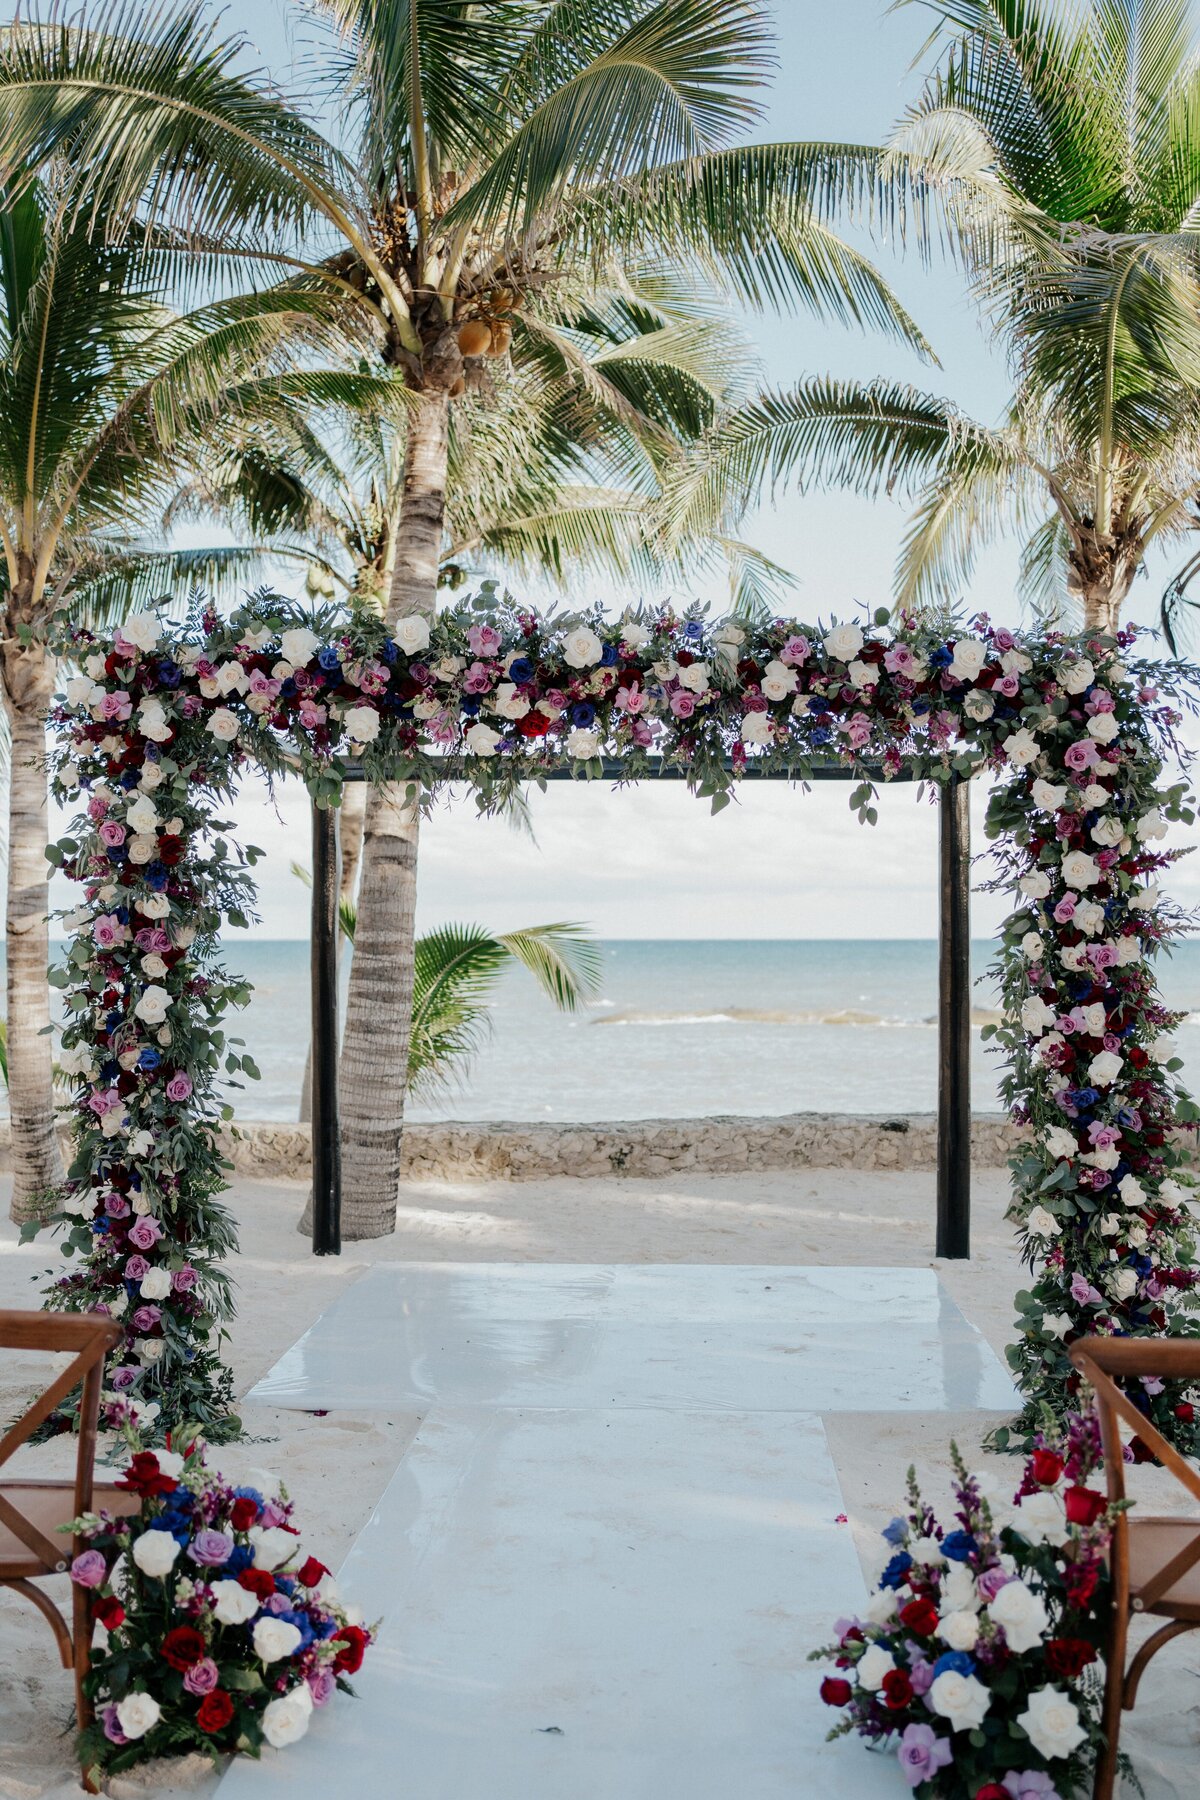 Imoni-Events-Arizona-and-Destination-Wedding-Planner-Four-Seasons-Cancun-Mexico-124